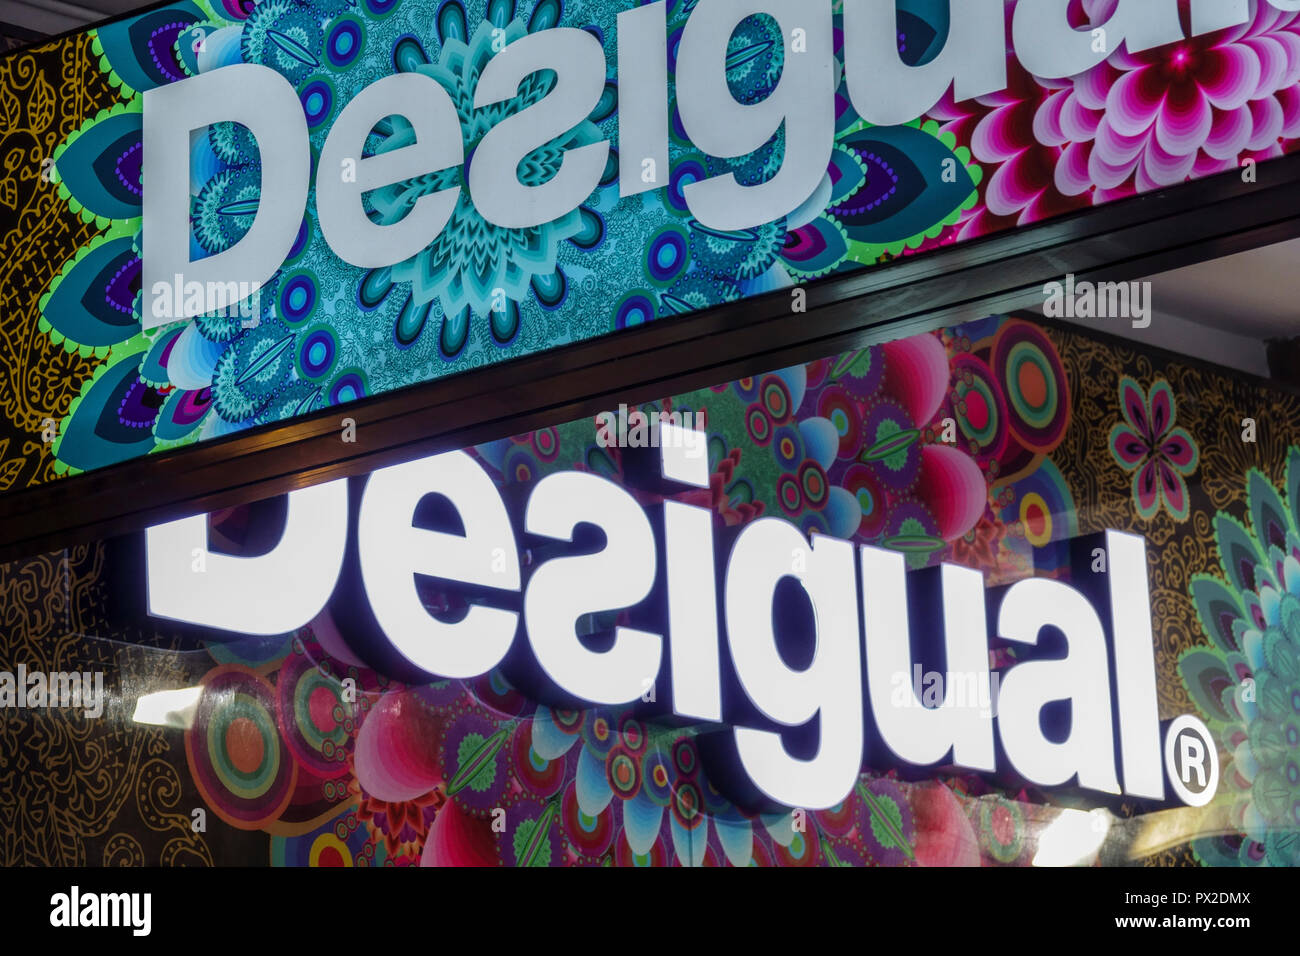 Desigual logo Spain luxury store sign Stock Photo - Alamy